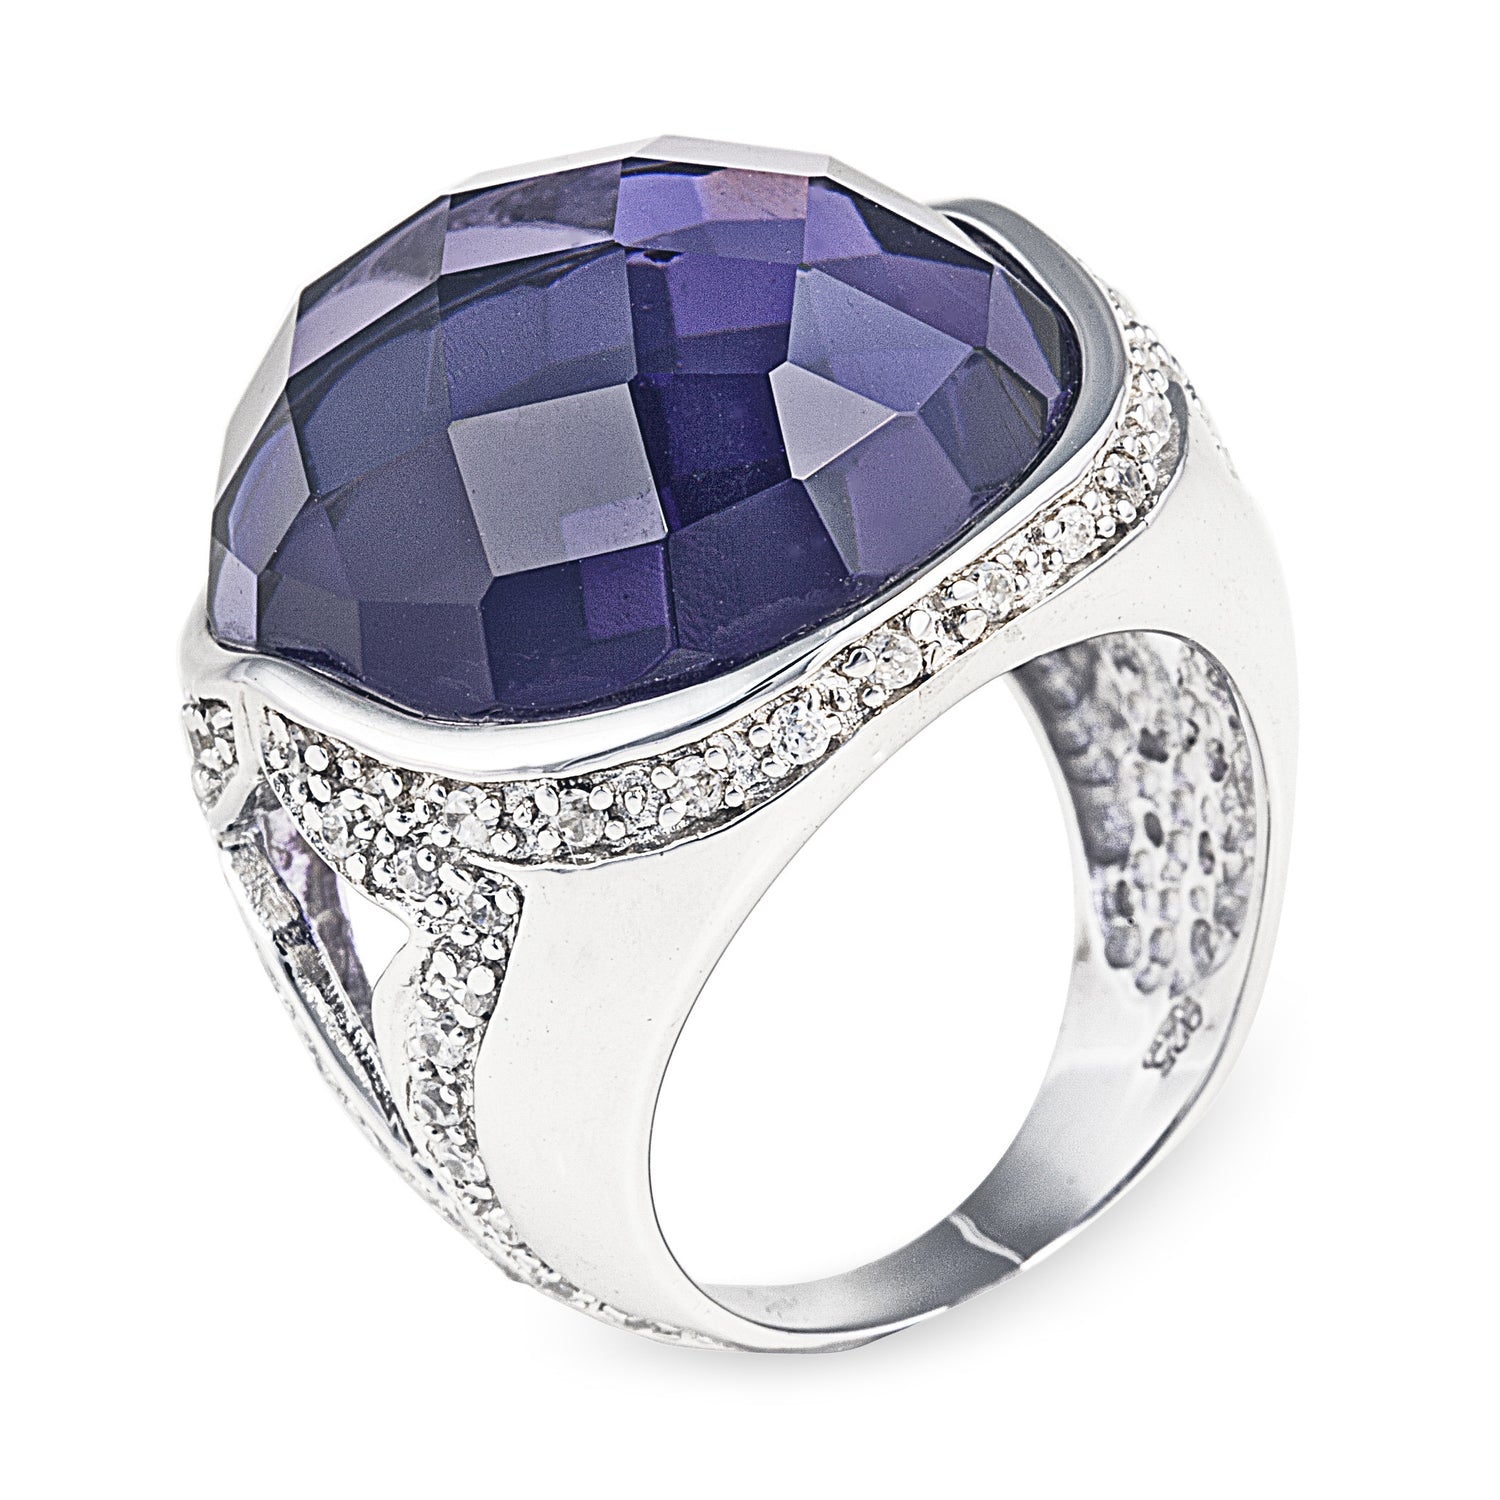 Purple Rings in 925 Sterling Silver. Worldwide Shipping from Australia.